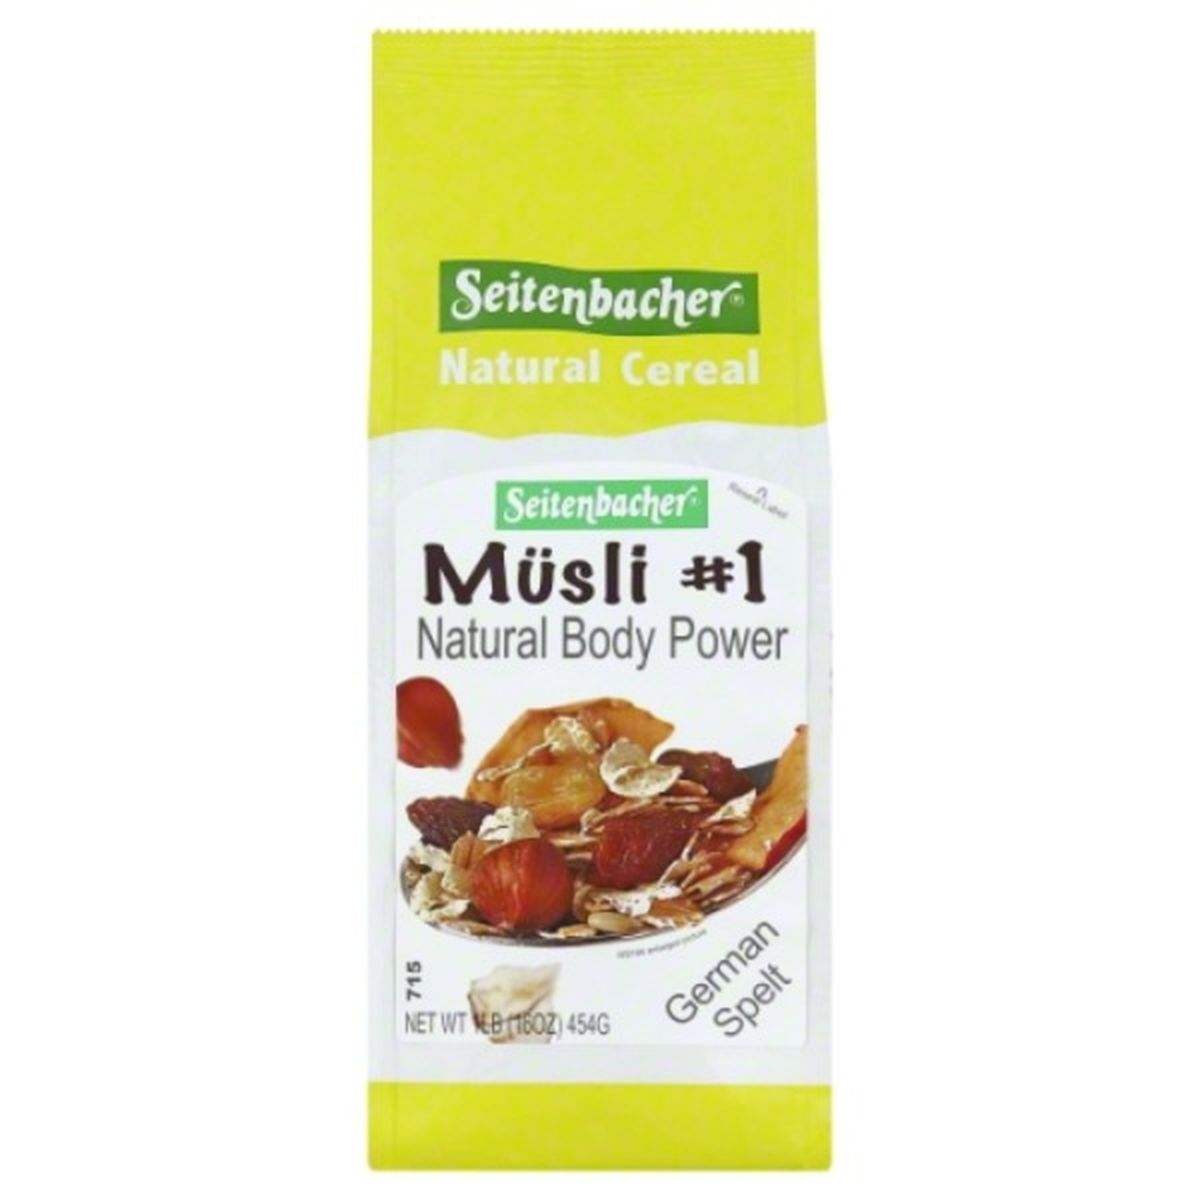 Calories in Seitenbacher Cereal, Natural, Musli No. 1, Natural Body Powder